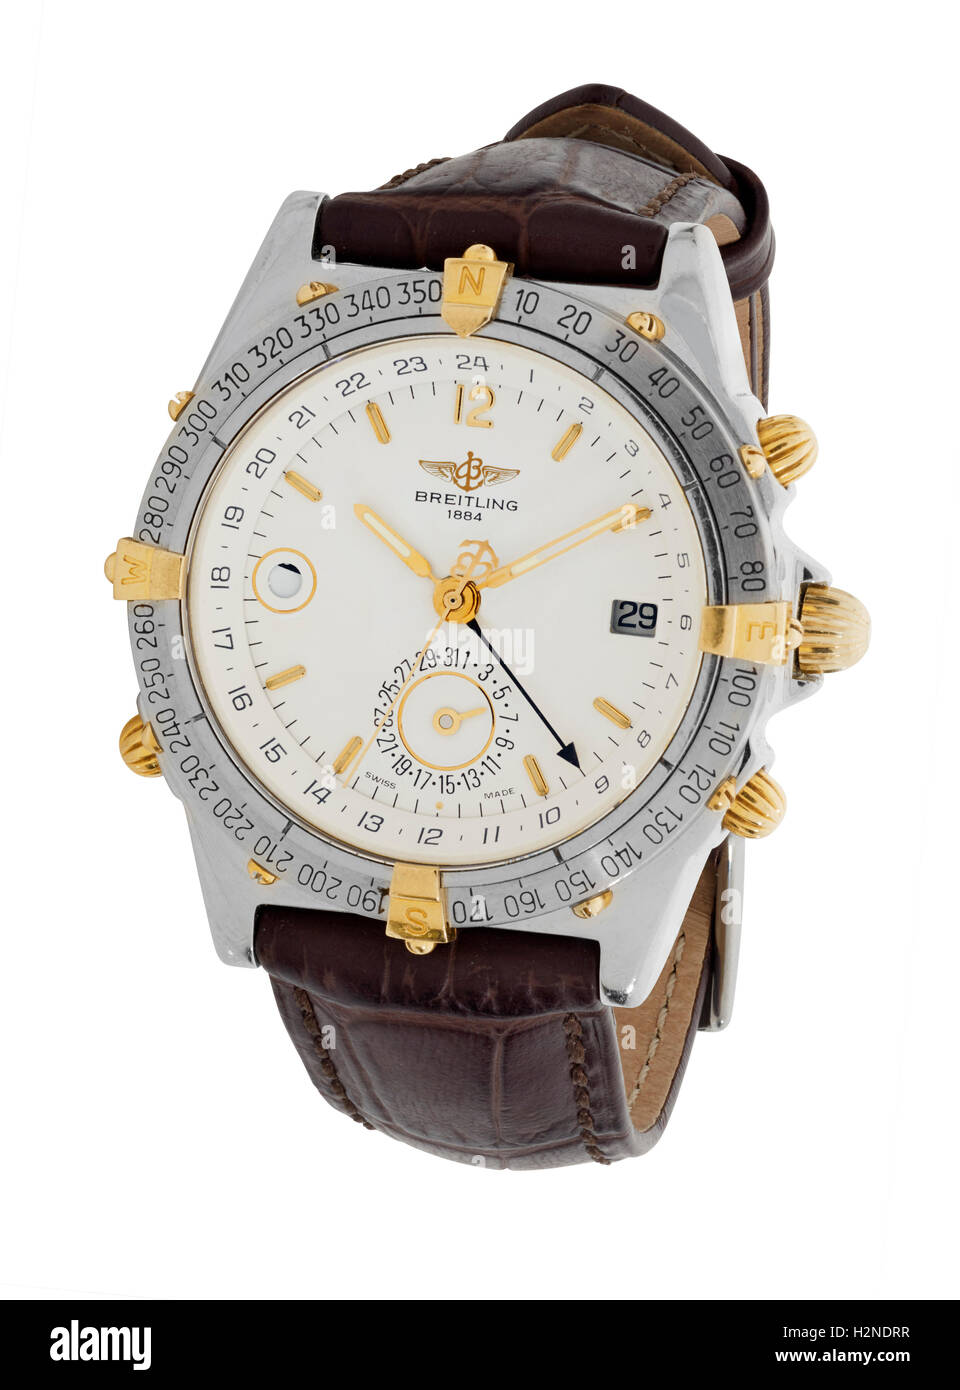 Breitling mans chronometer compass watch Stock Photo